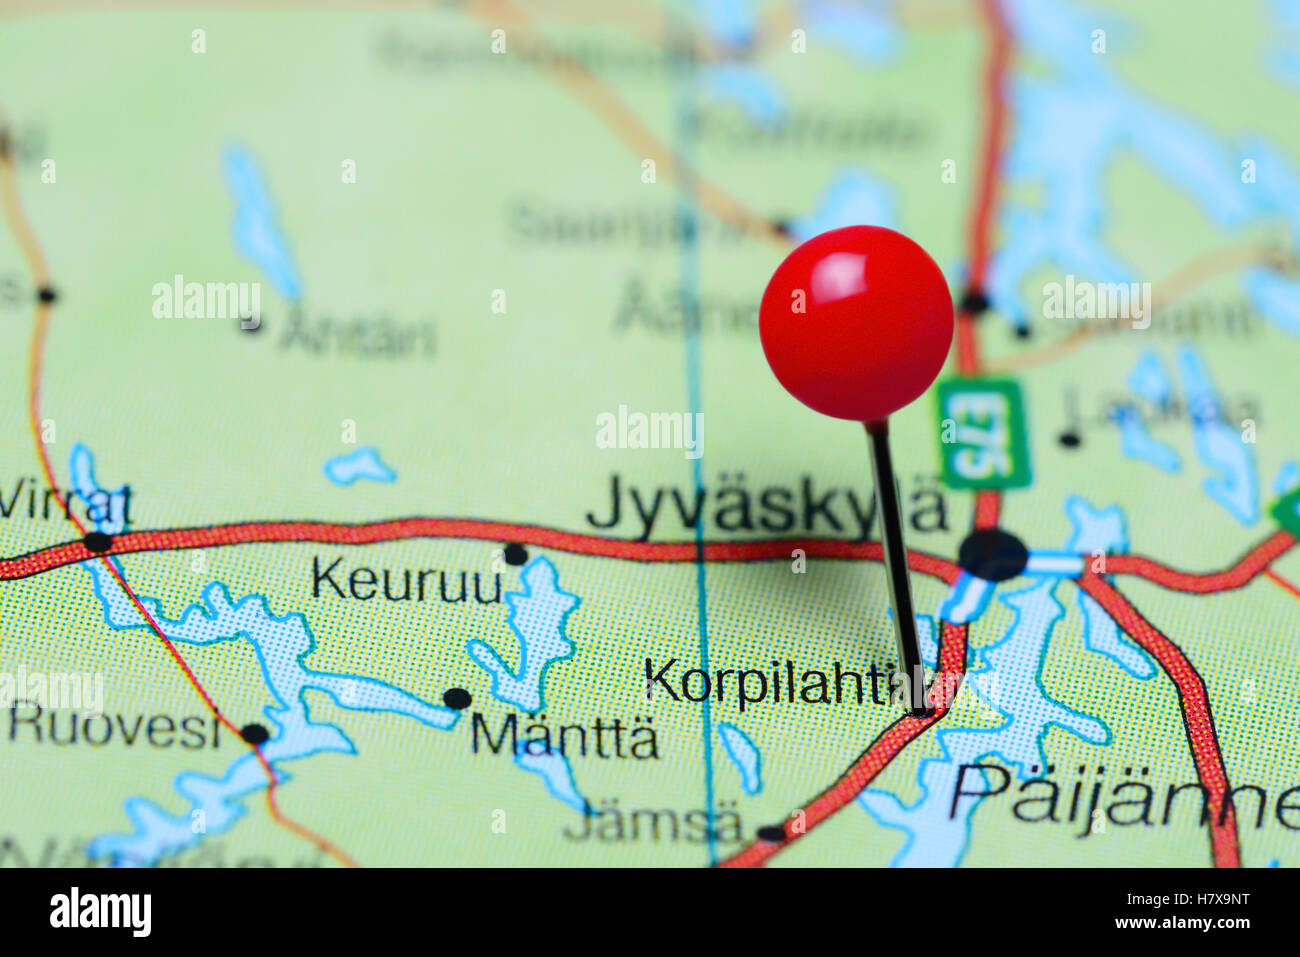 Korpilahti pinned on a map of Finland Stock Photo